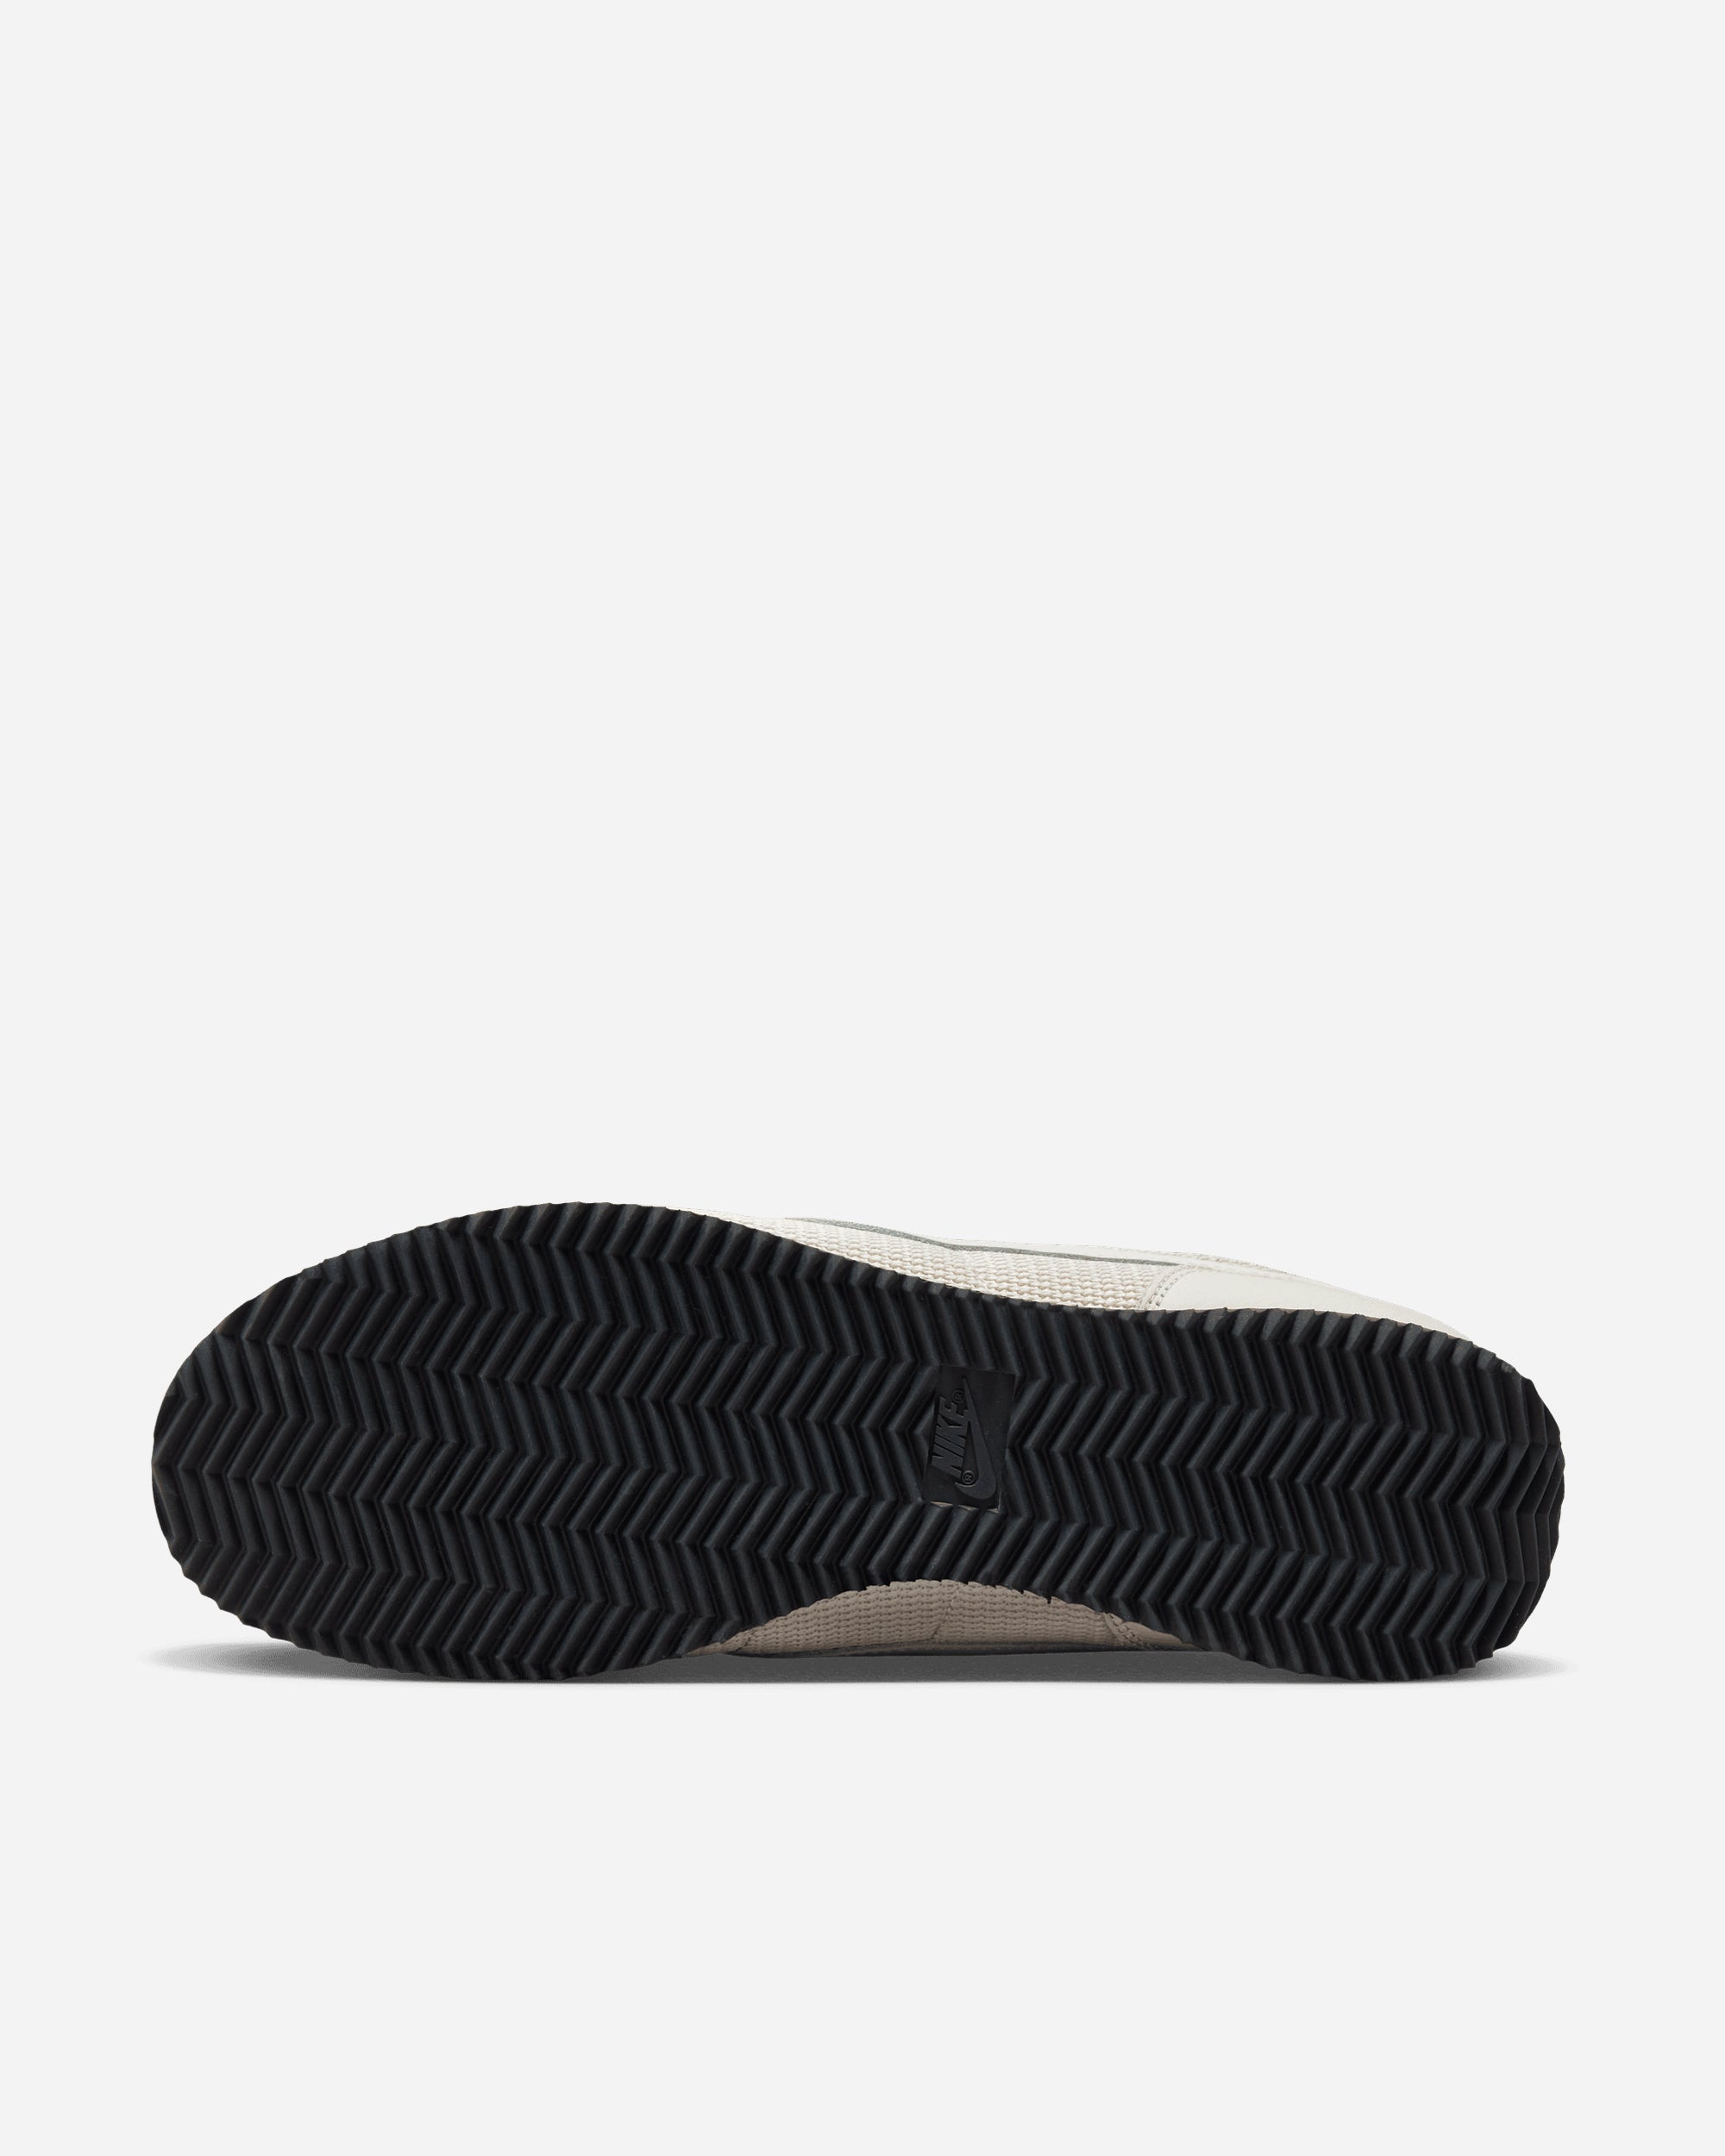 Nike Cortez LT OREWOOD BRN/WHITE FZ4630-100